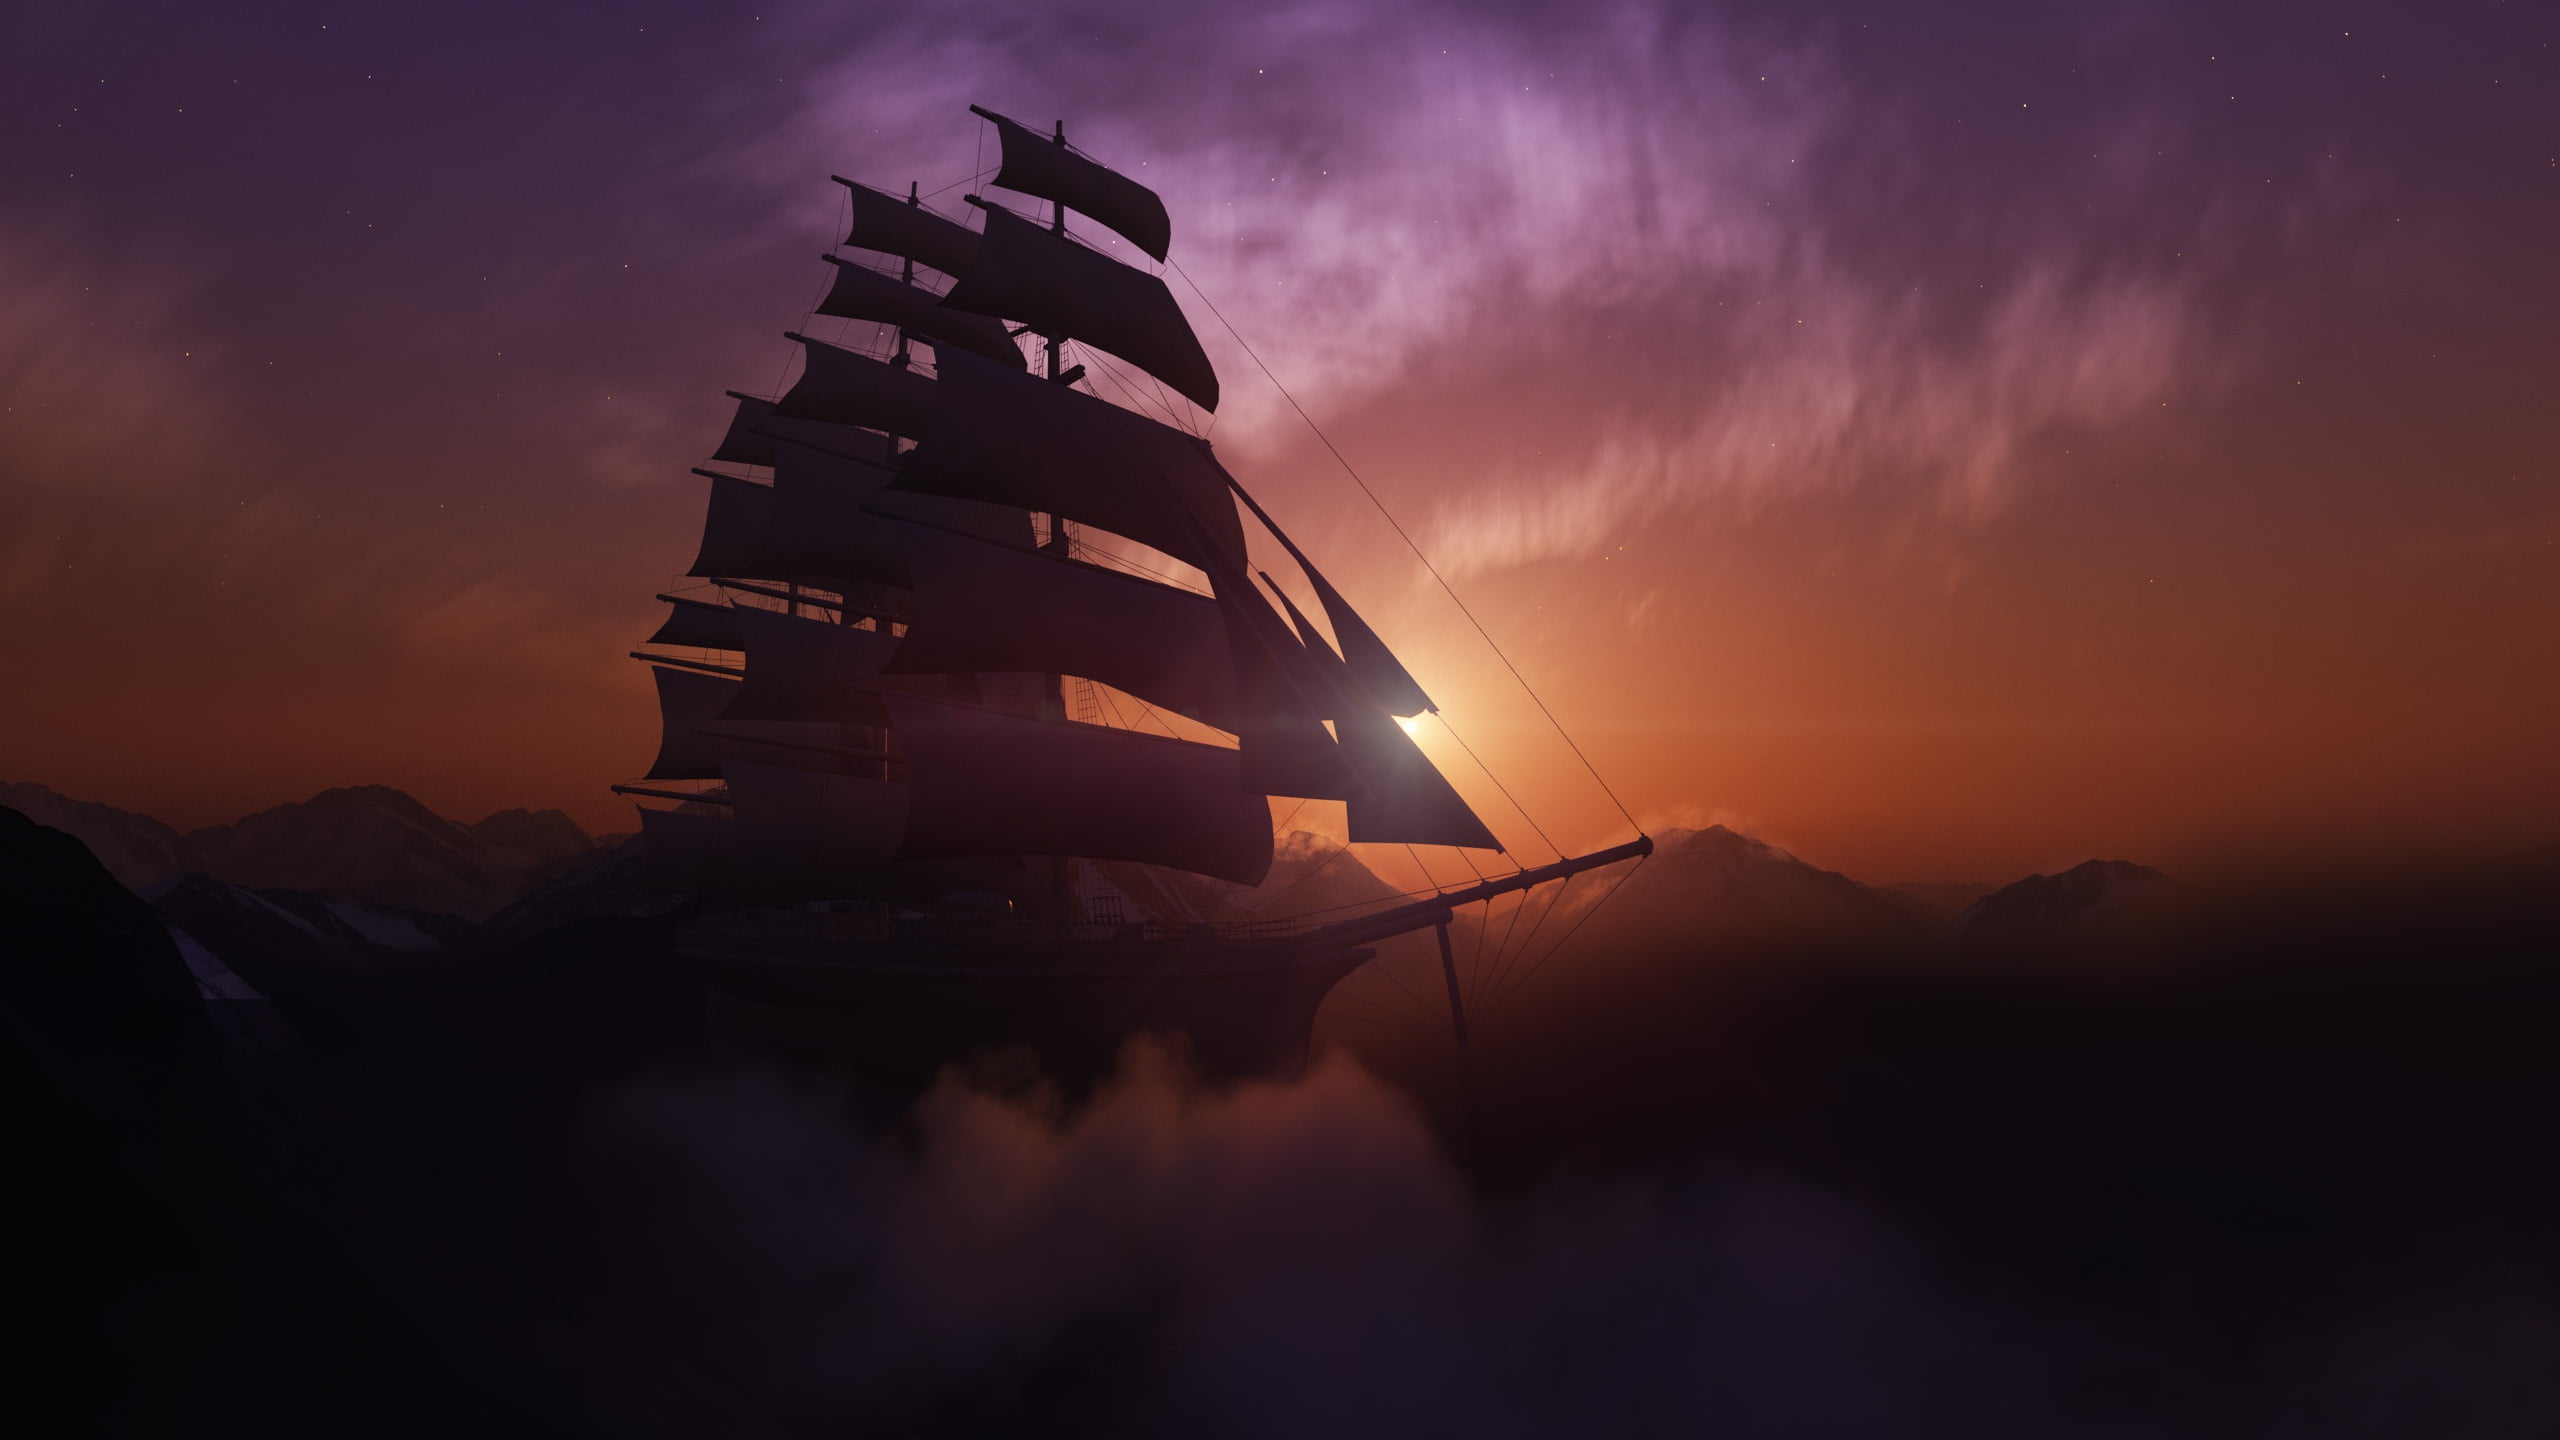 the sun, sunset, mountains, ship, sailboat, brig